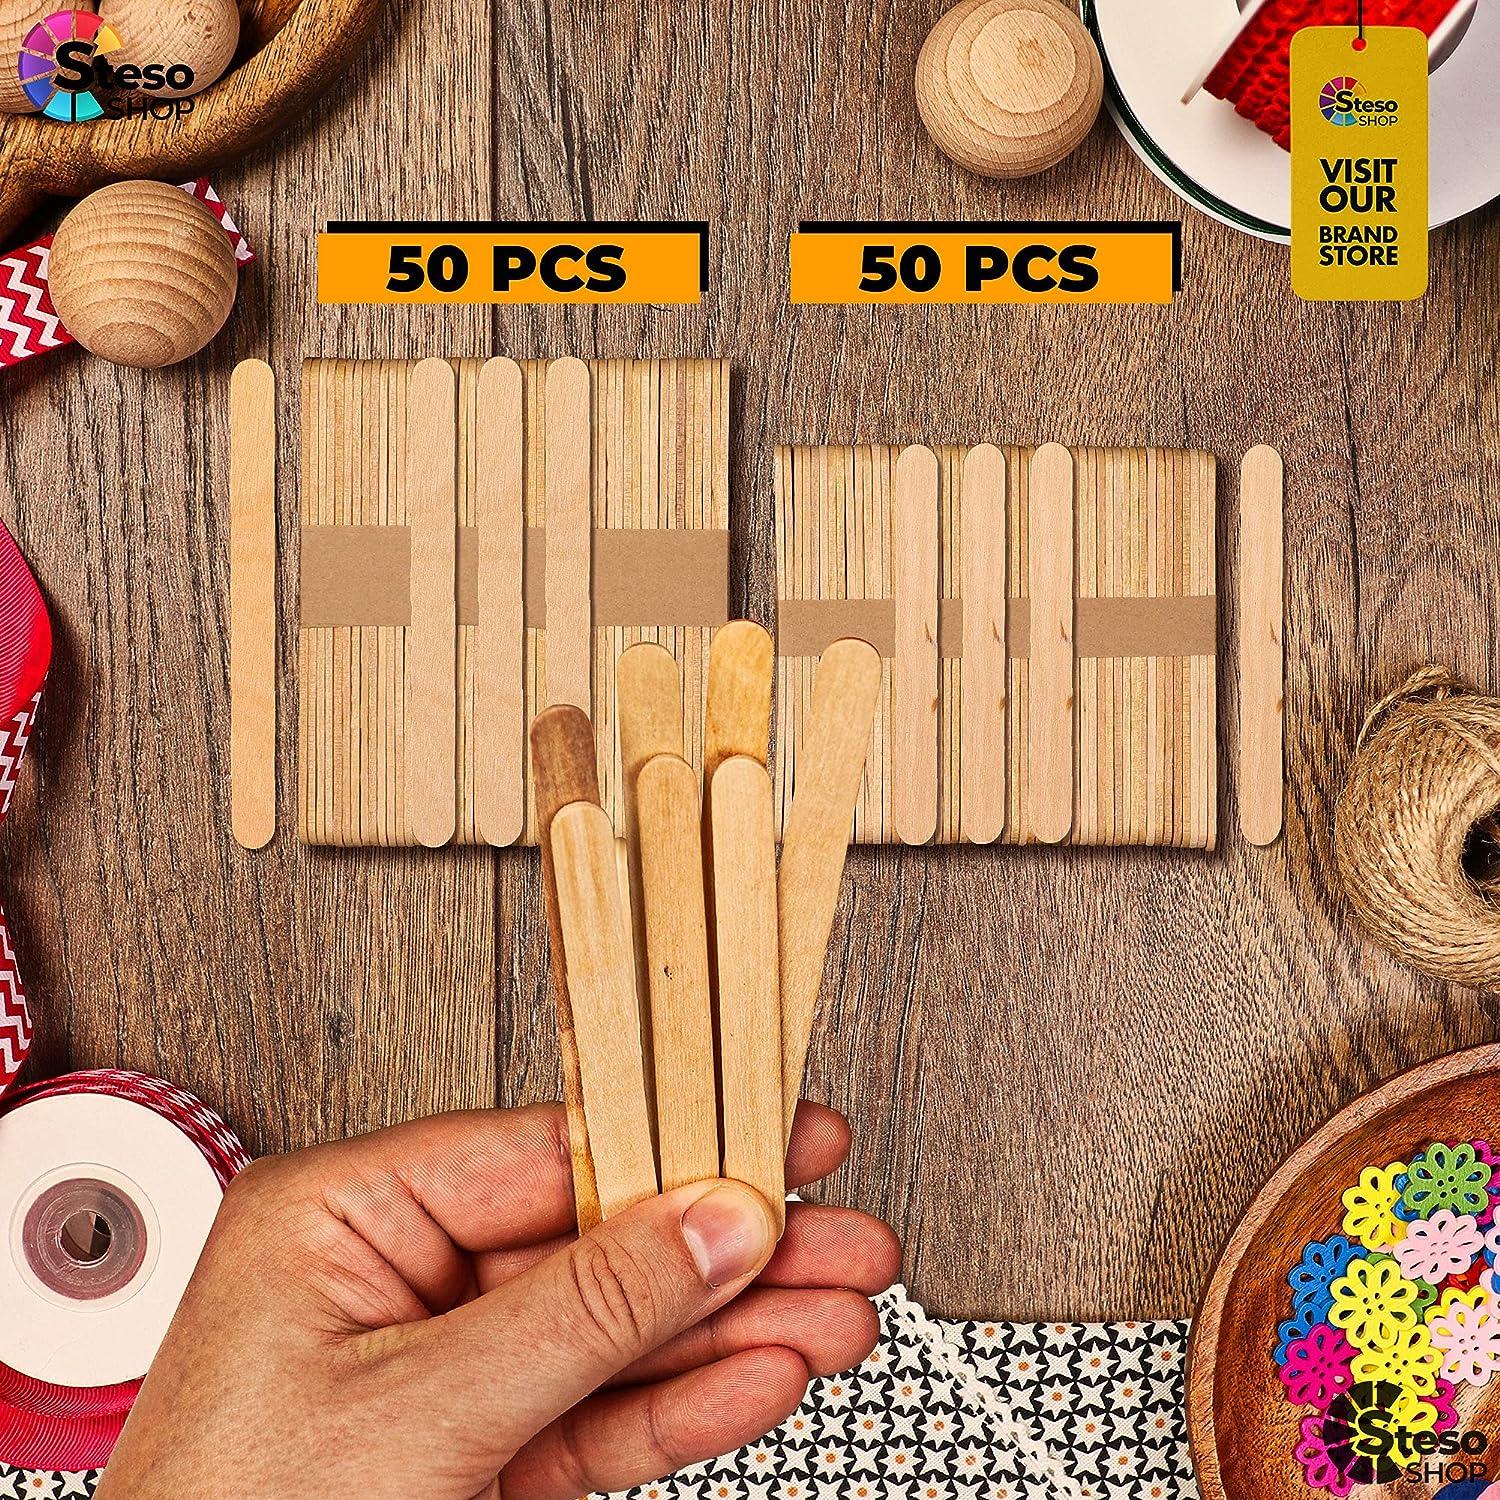 Popsicle Stick for Craft Supplies Sticks - Premium Quality 100 pcs